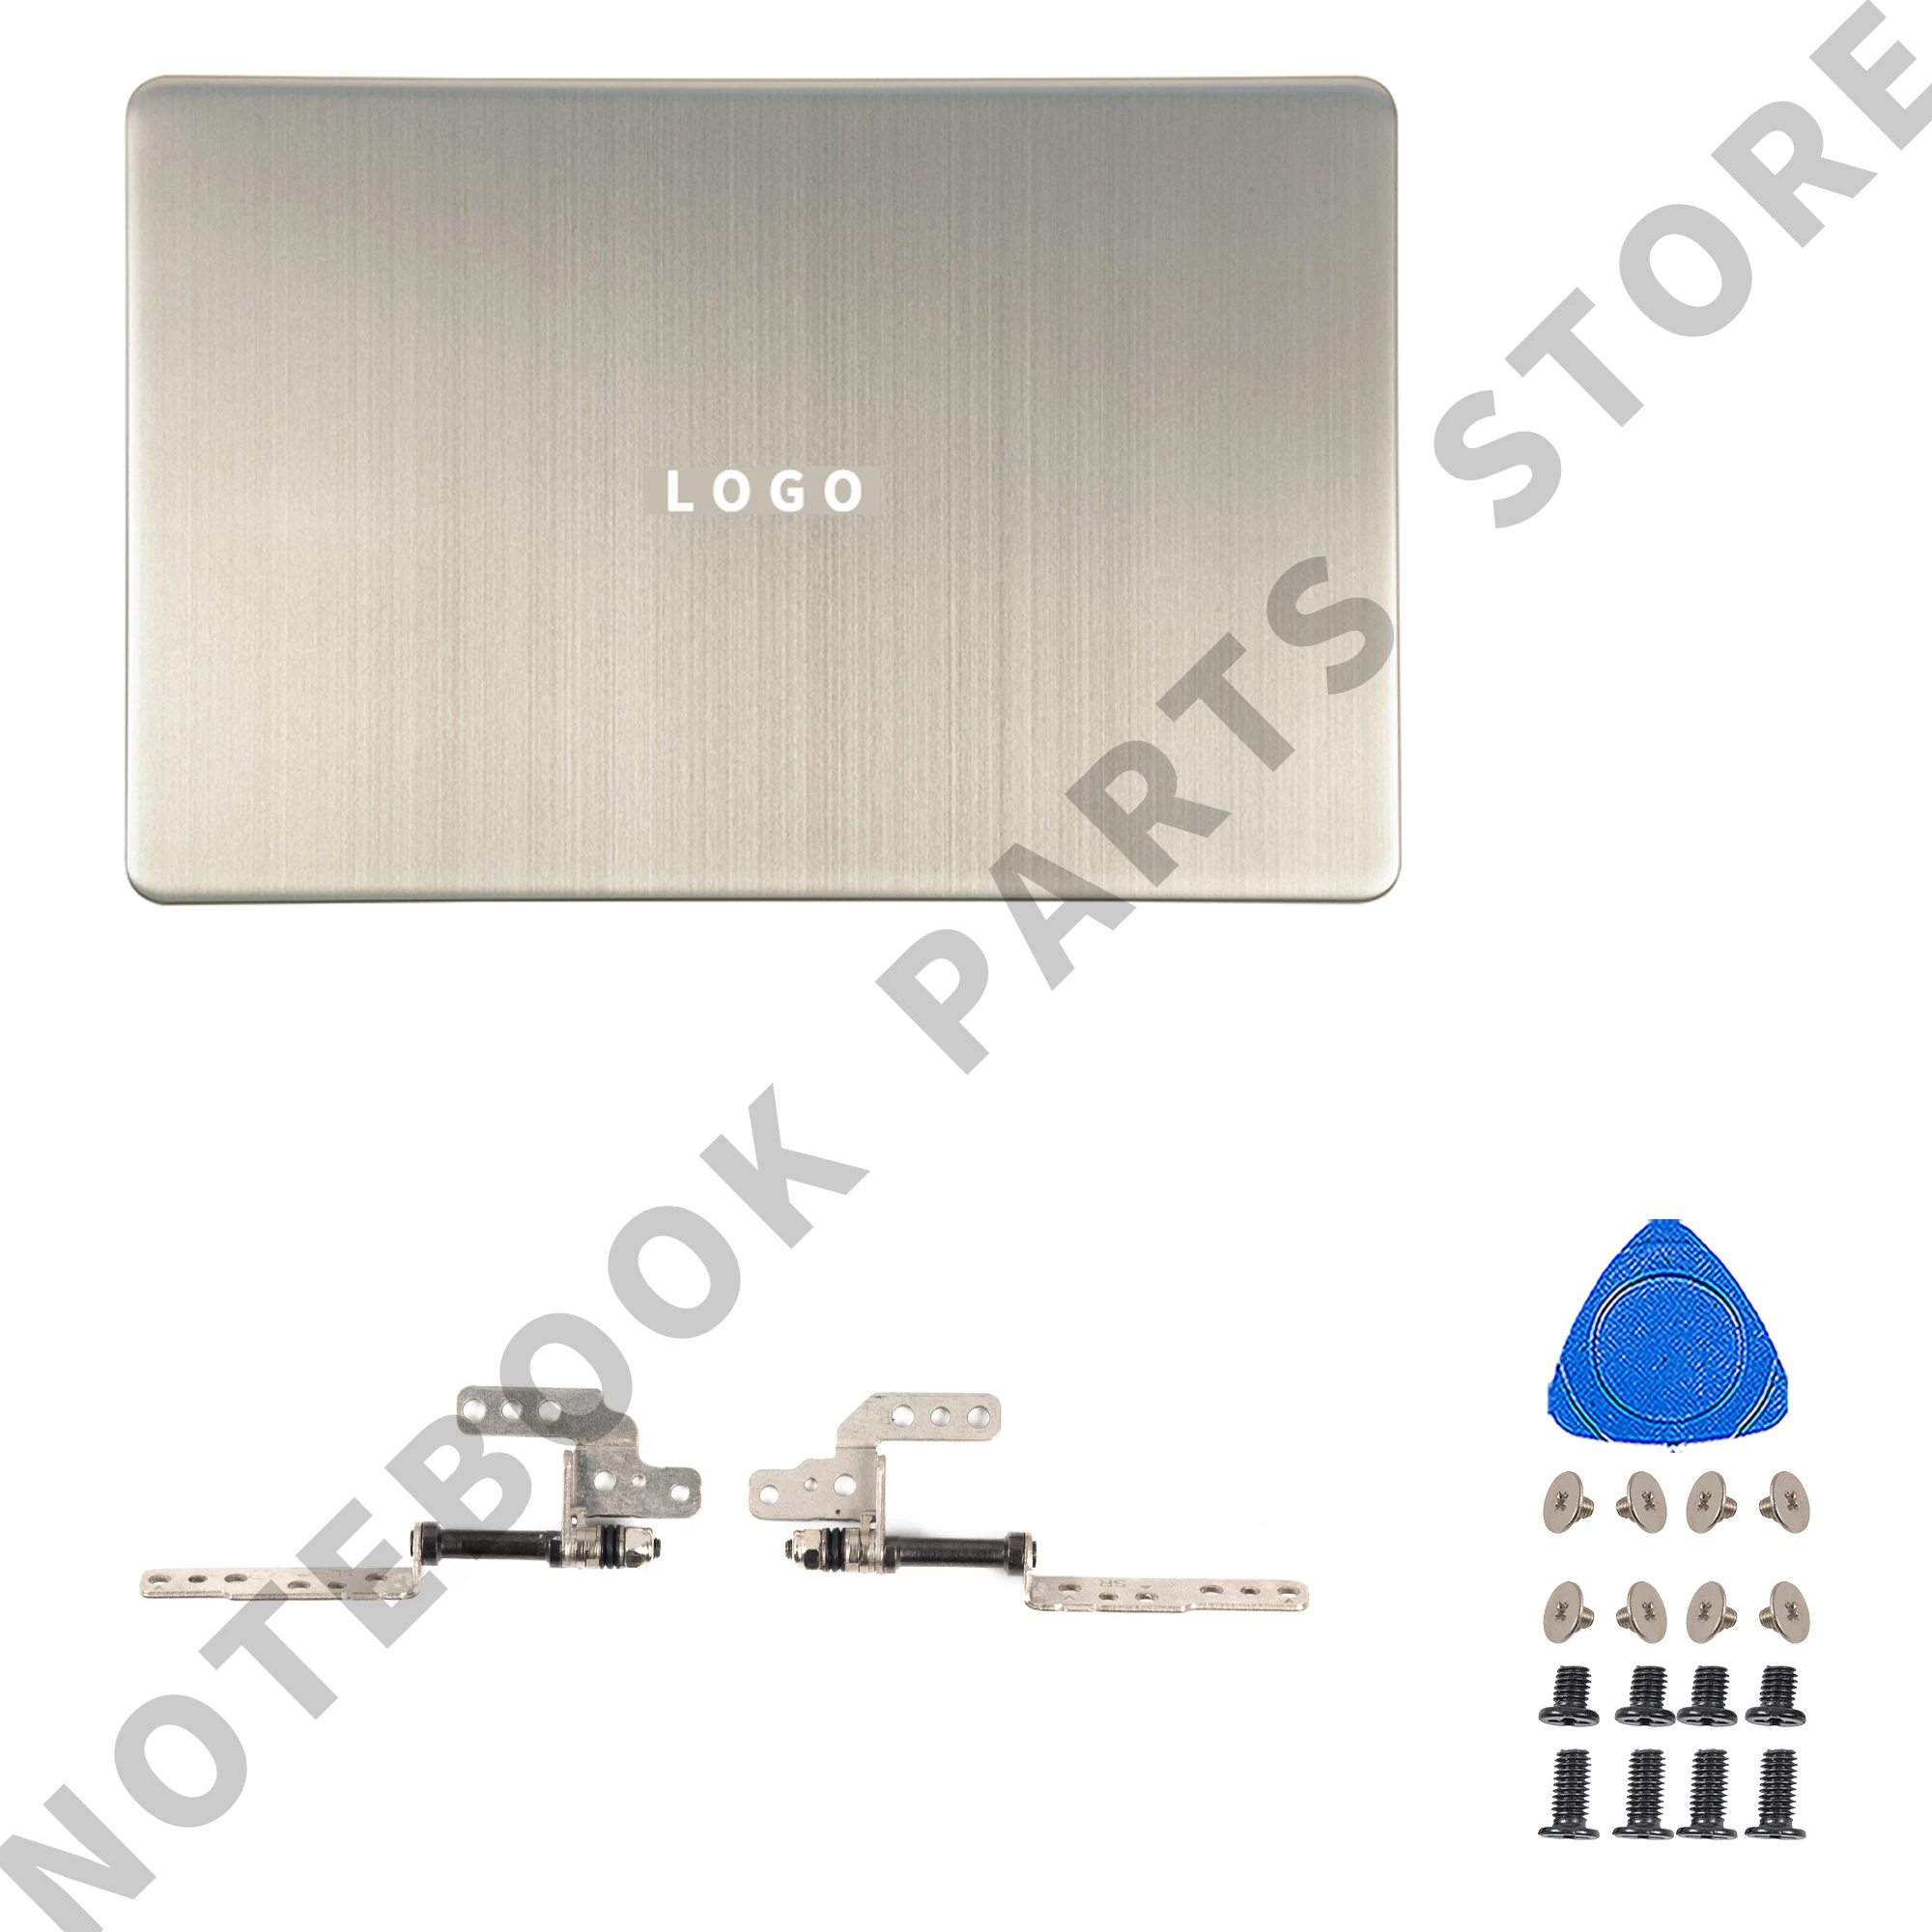 Aluminium Laptop Parts For ASUS VivoBook S510U A510 A510U X510 F510U S510 F510 LCD Back Cover Hinges HingeCover Metal Gold